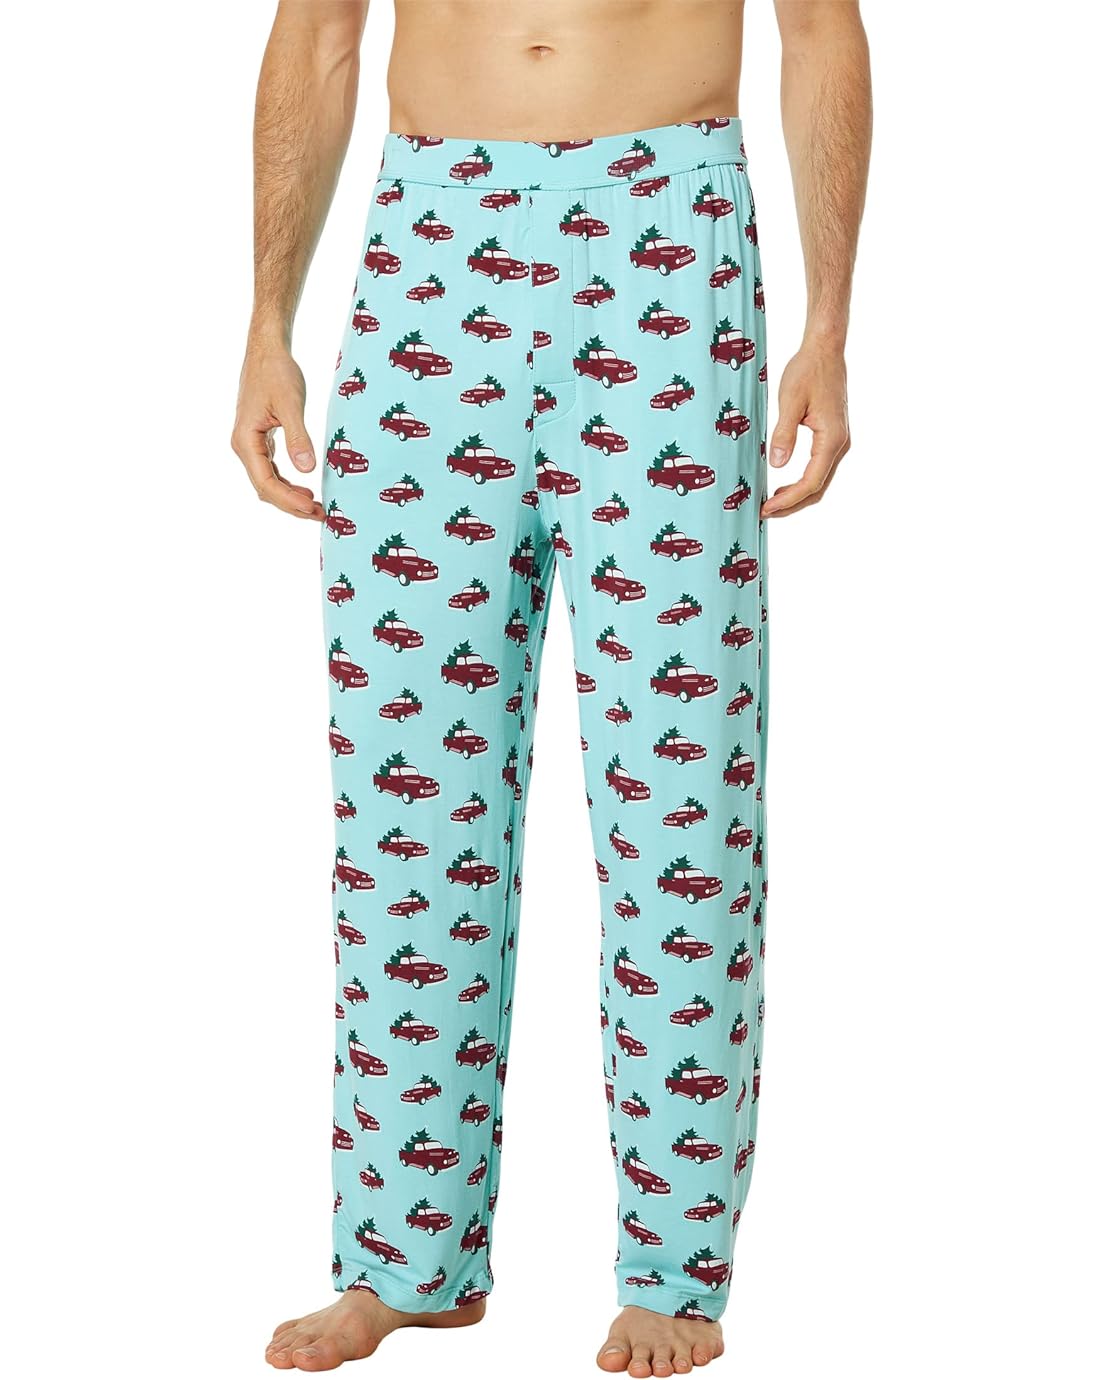  Kickee Pants Pajama Pants